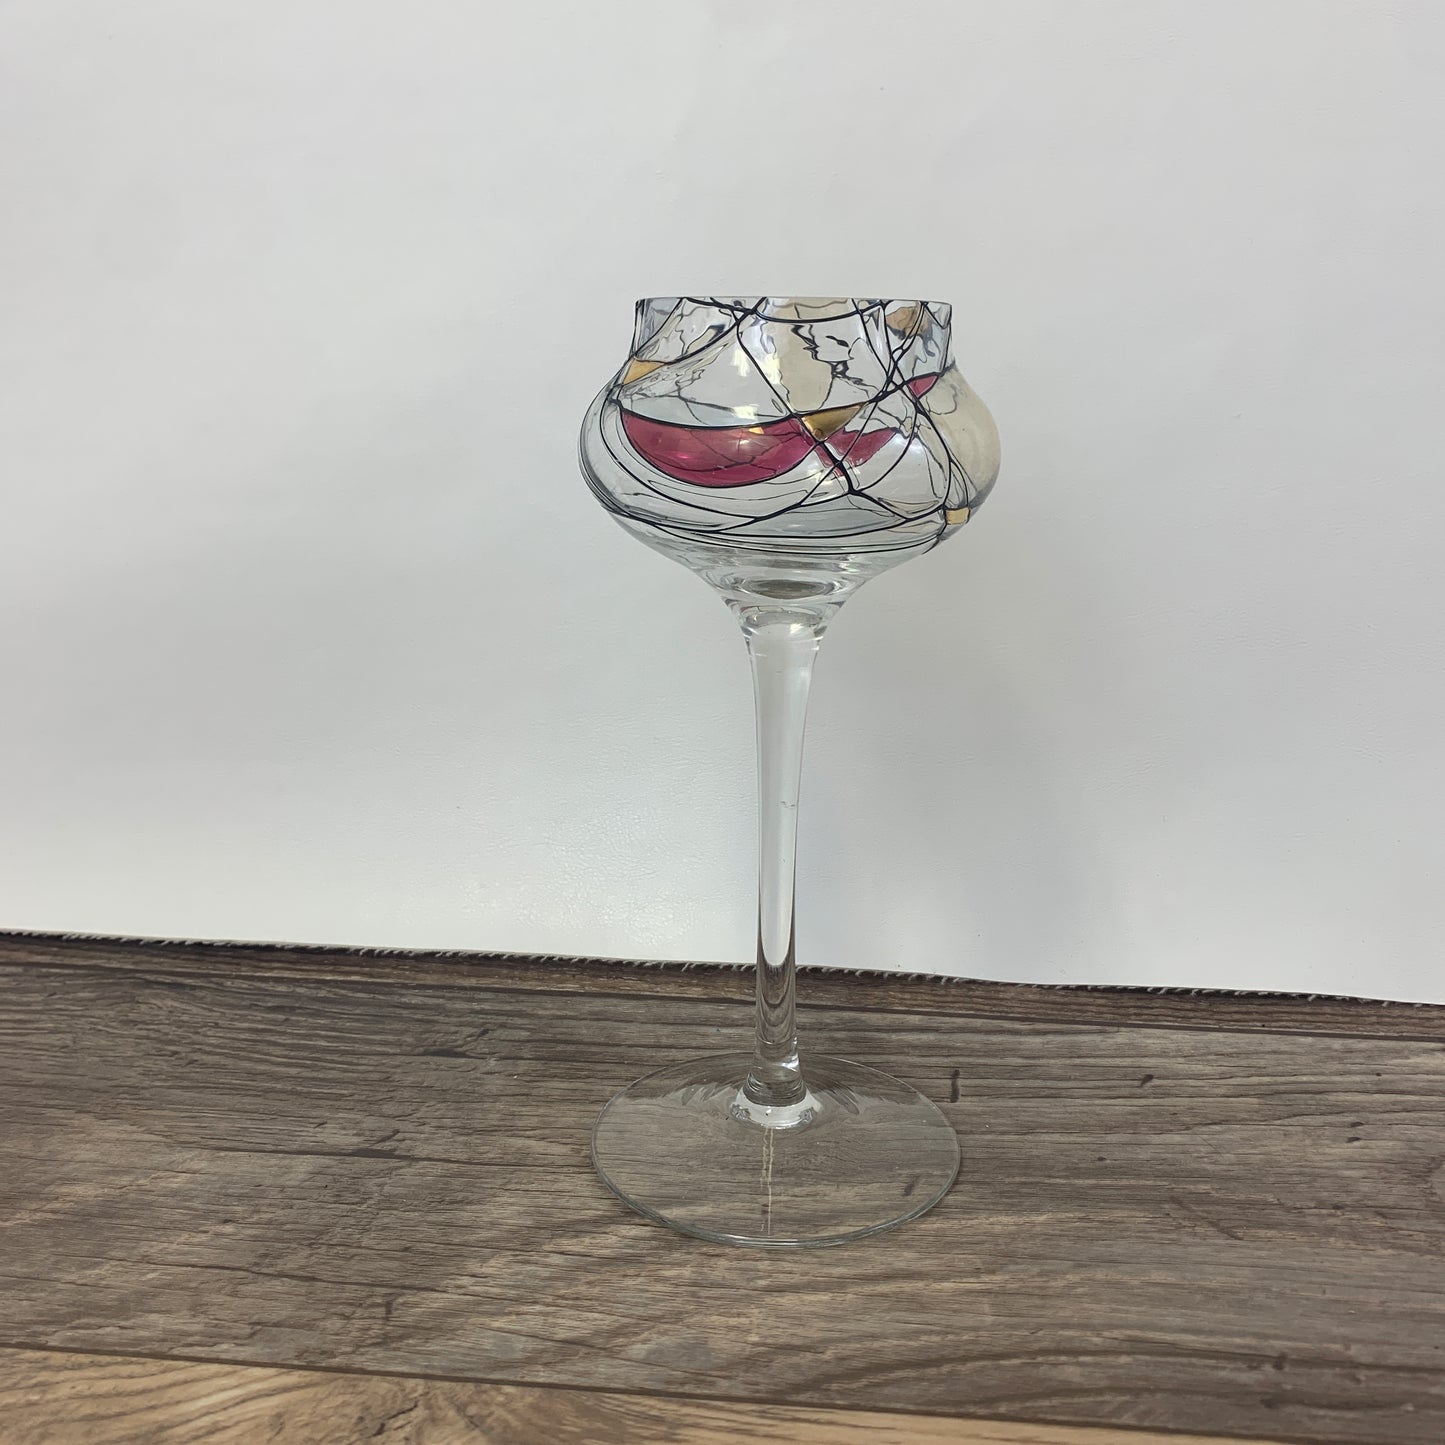 Stained Glass Tealight Holder Partylite Calypso Mosaic Tea Light Holder Vintage 90s Art Glass Candleholder